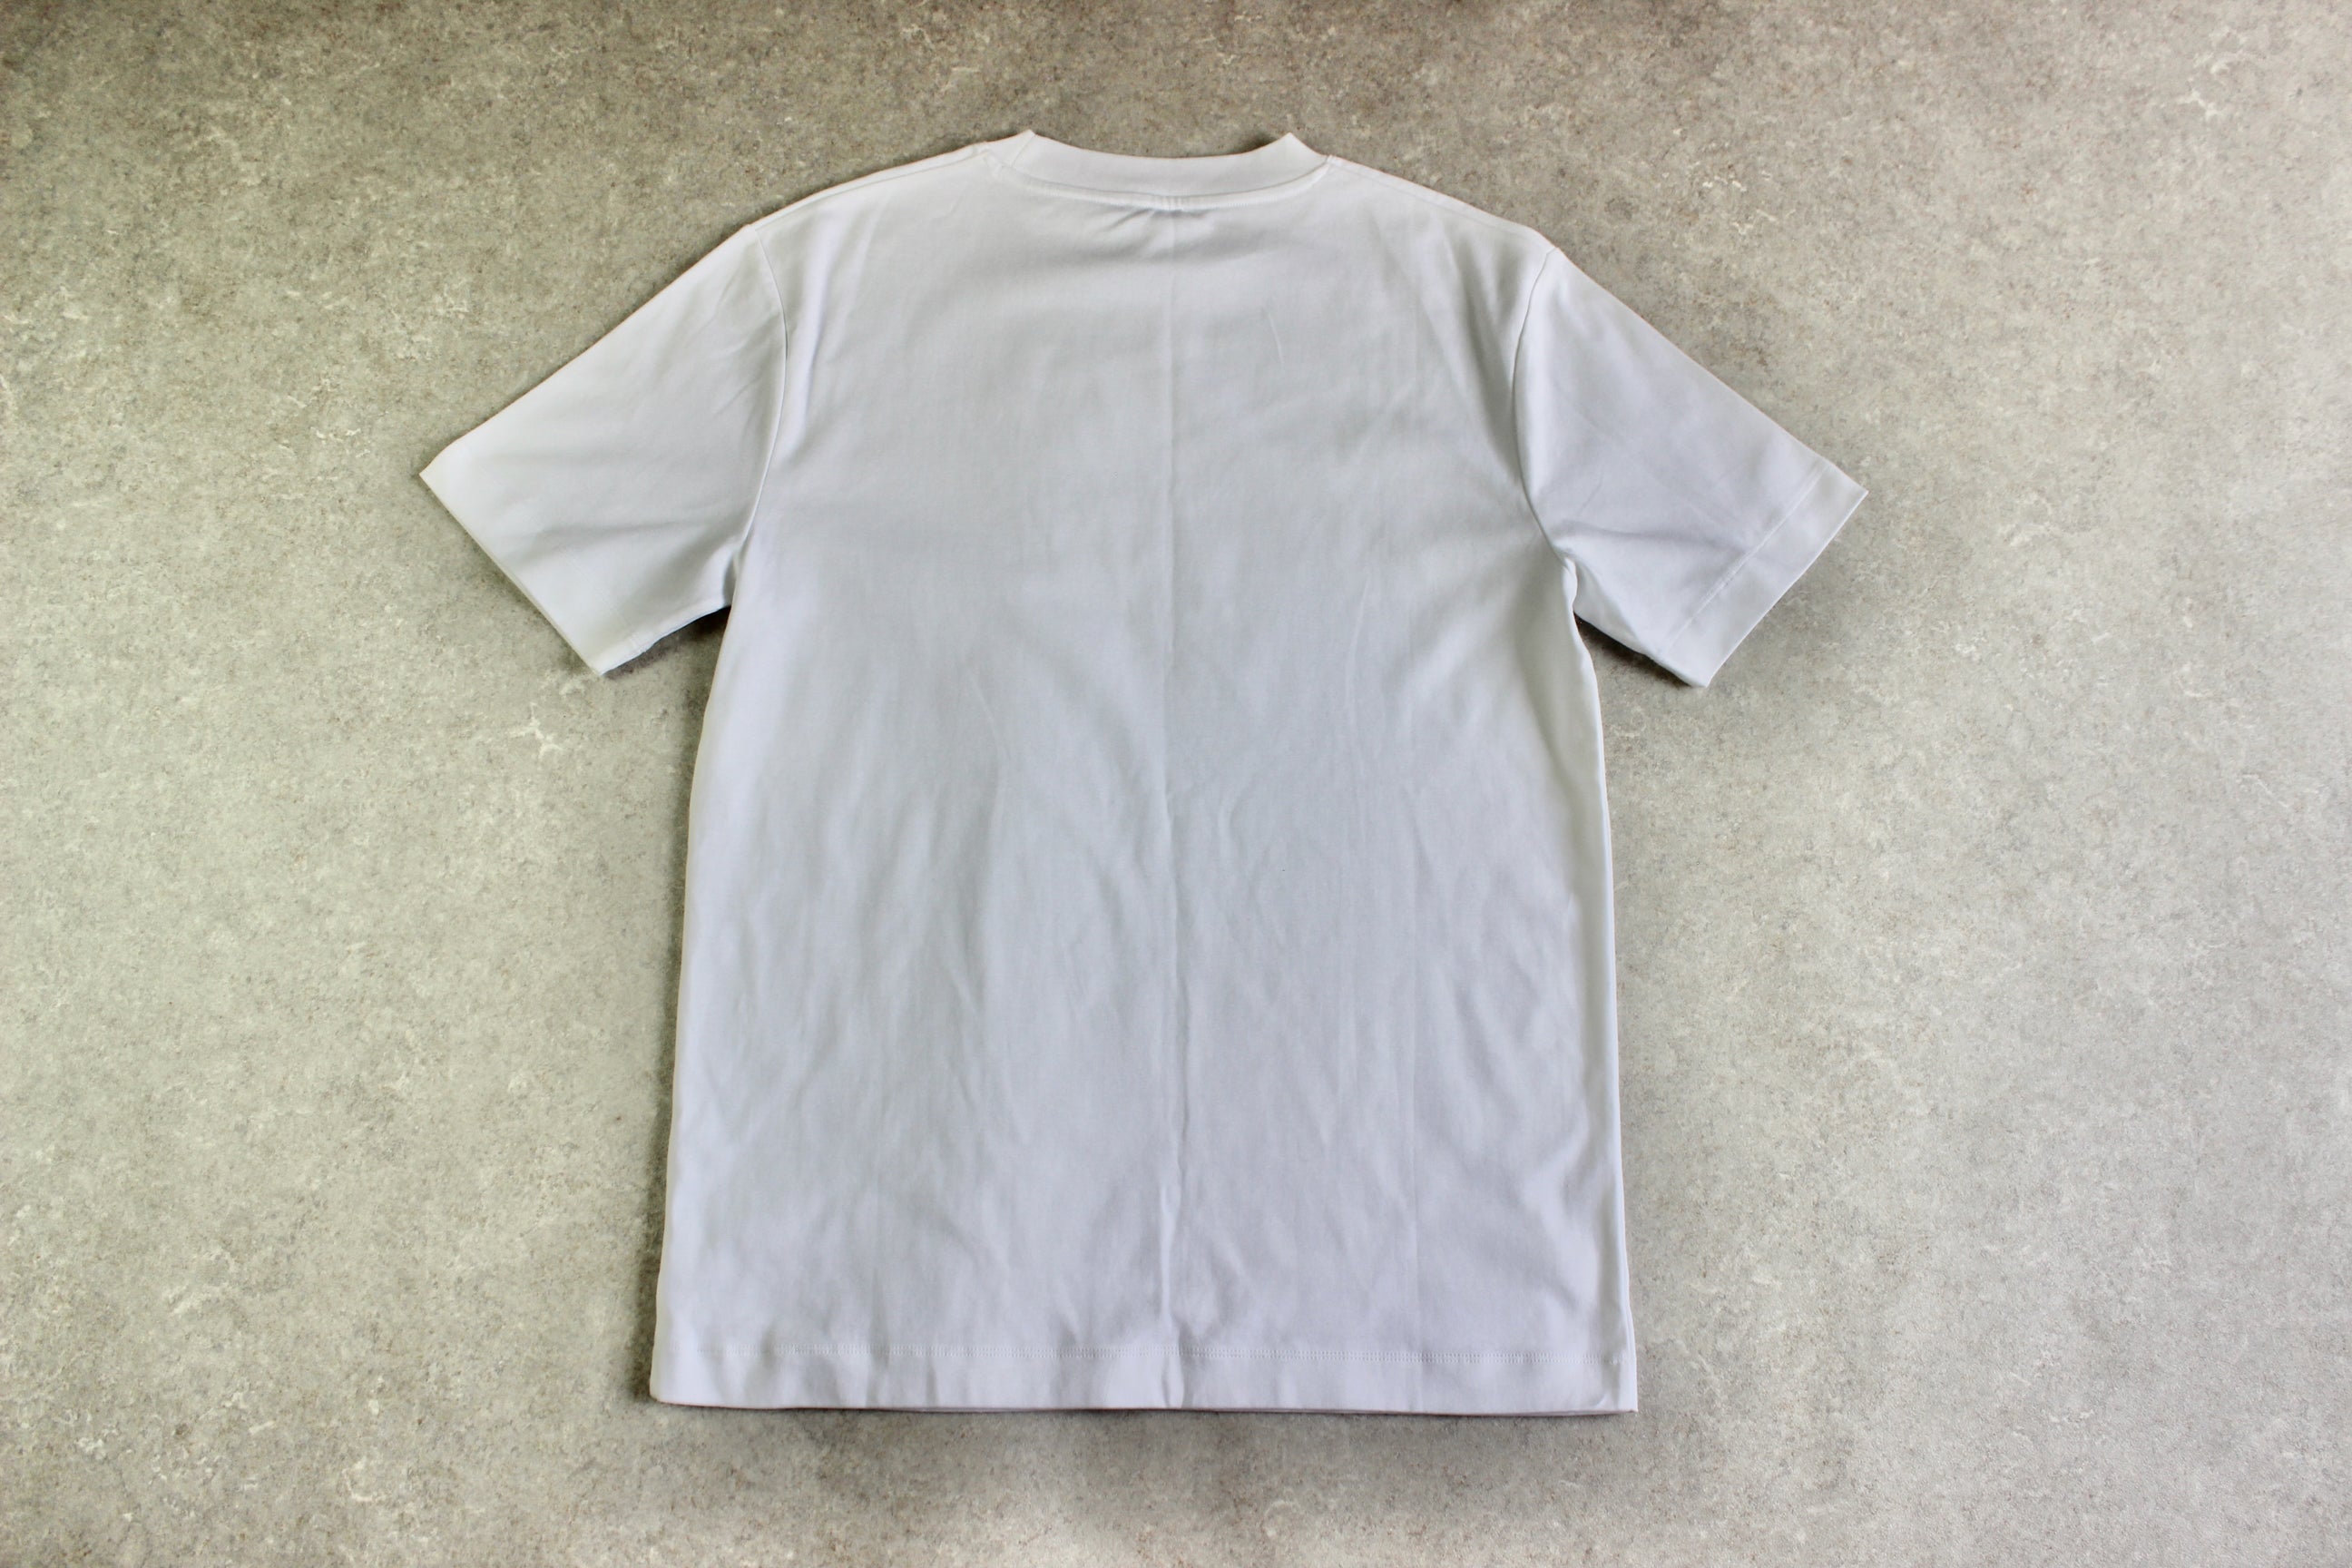 Sunspel - Brand New T Shirt - White - Medium